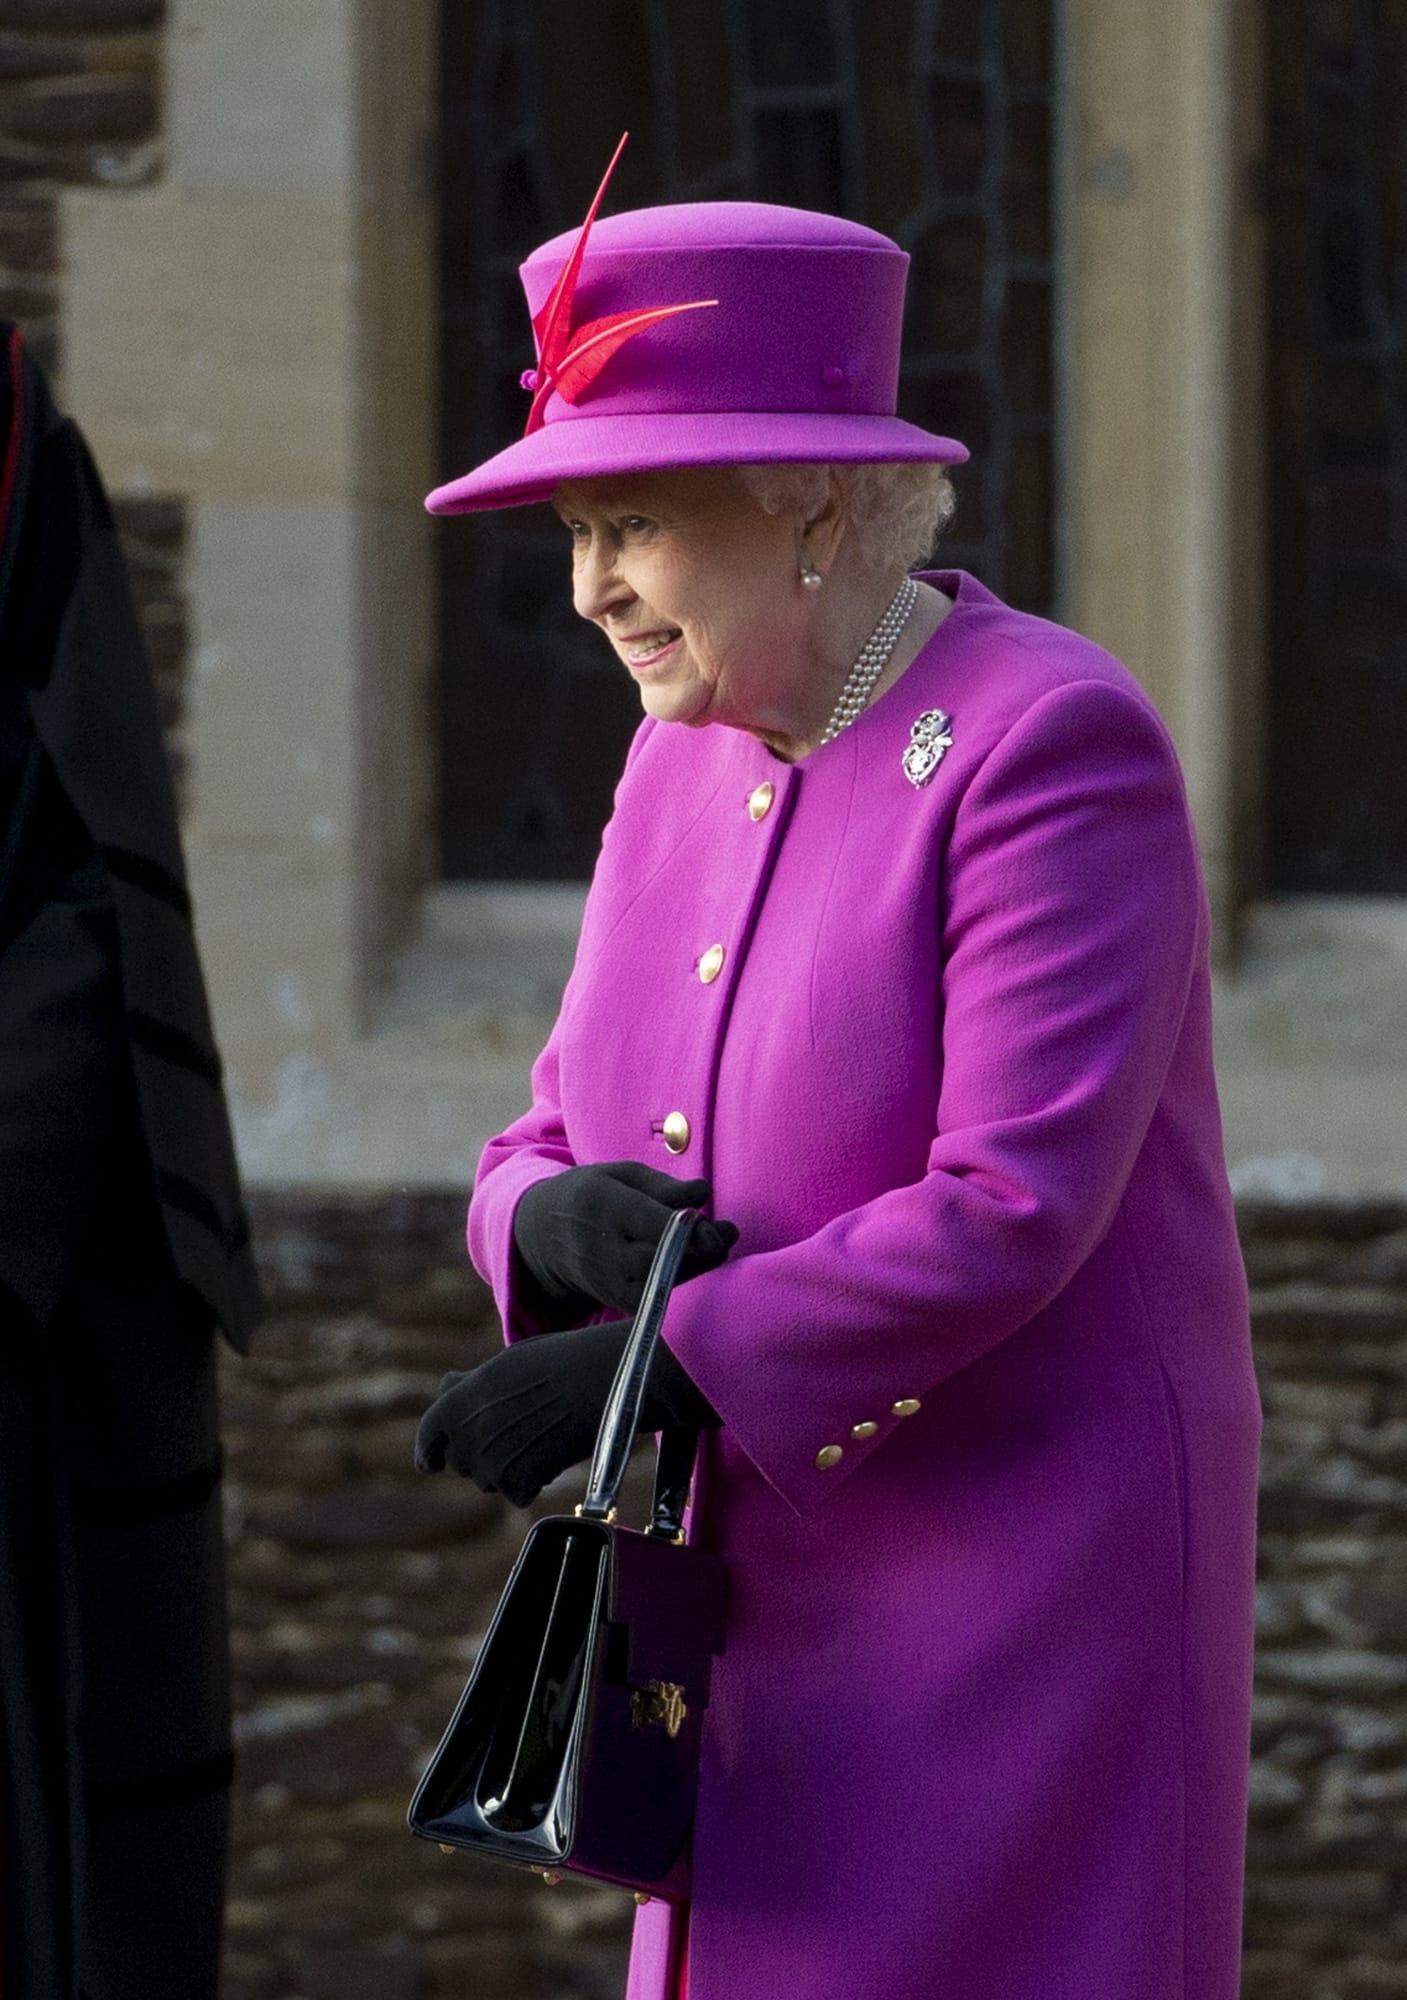 Queen Elizabeth II
Writes own holiday speech